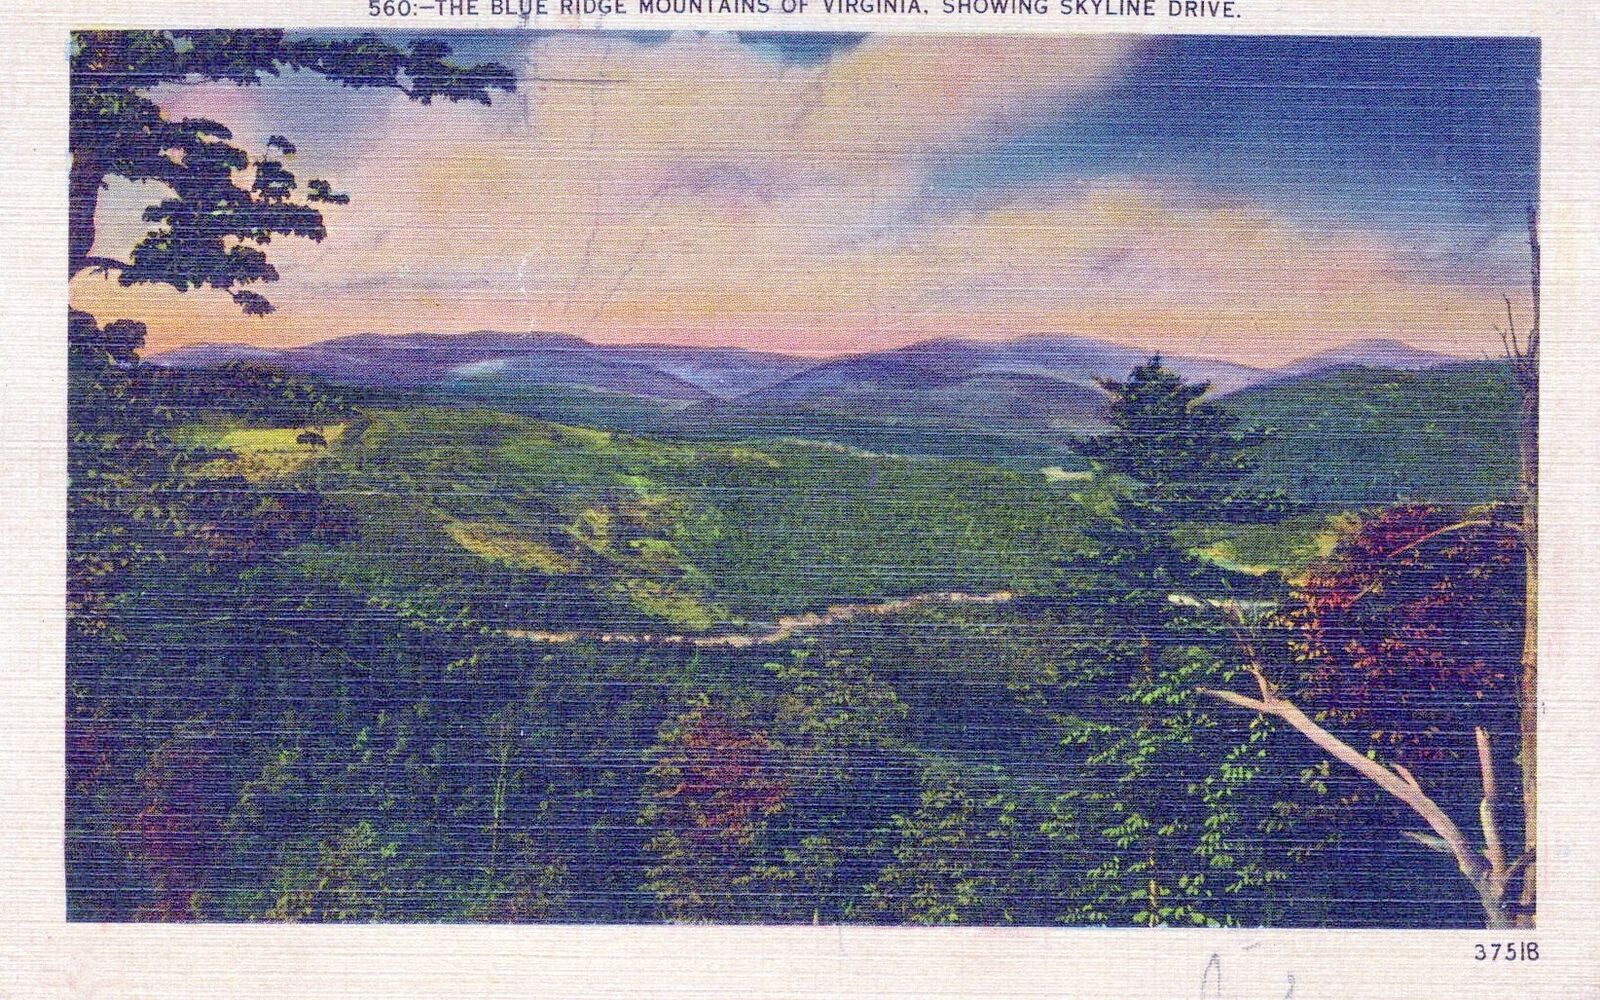 VINTAGE POSTCARD THE BLUE RIDGE MOUNTAINS OF VIRGINIA SHOWING SKYLINE DRIVE 1941